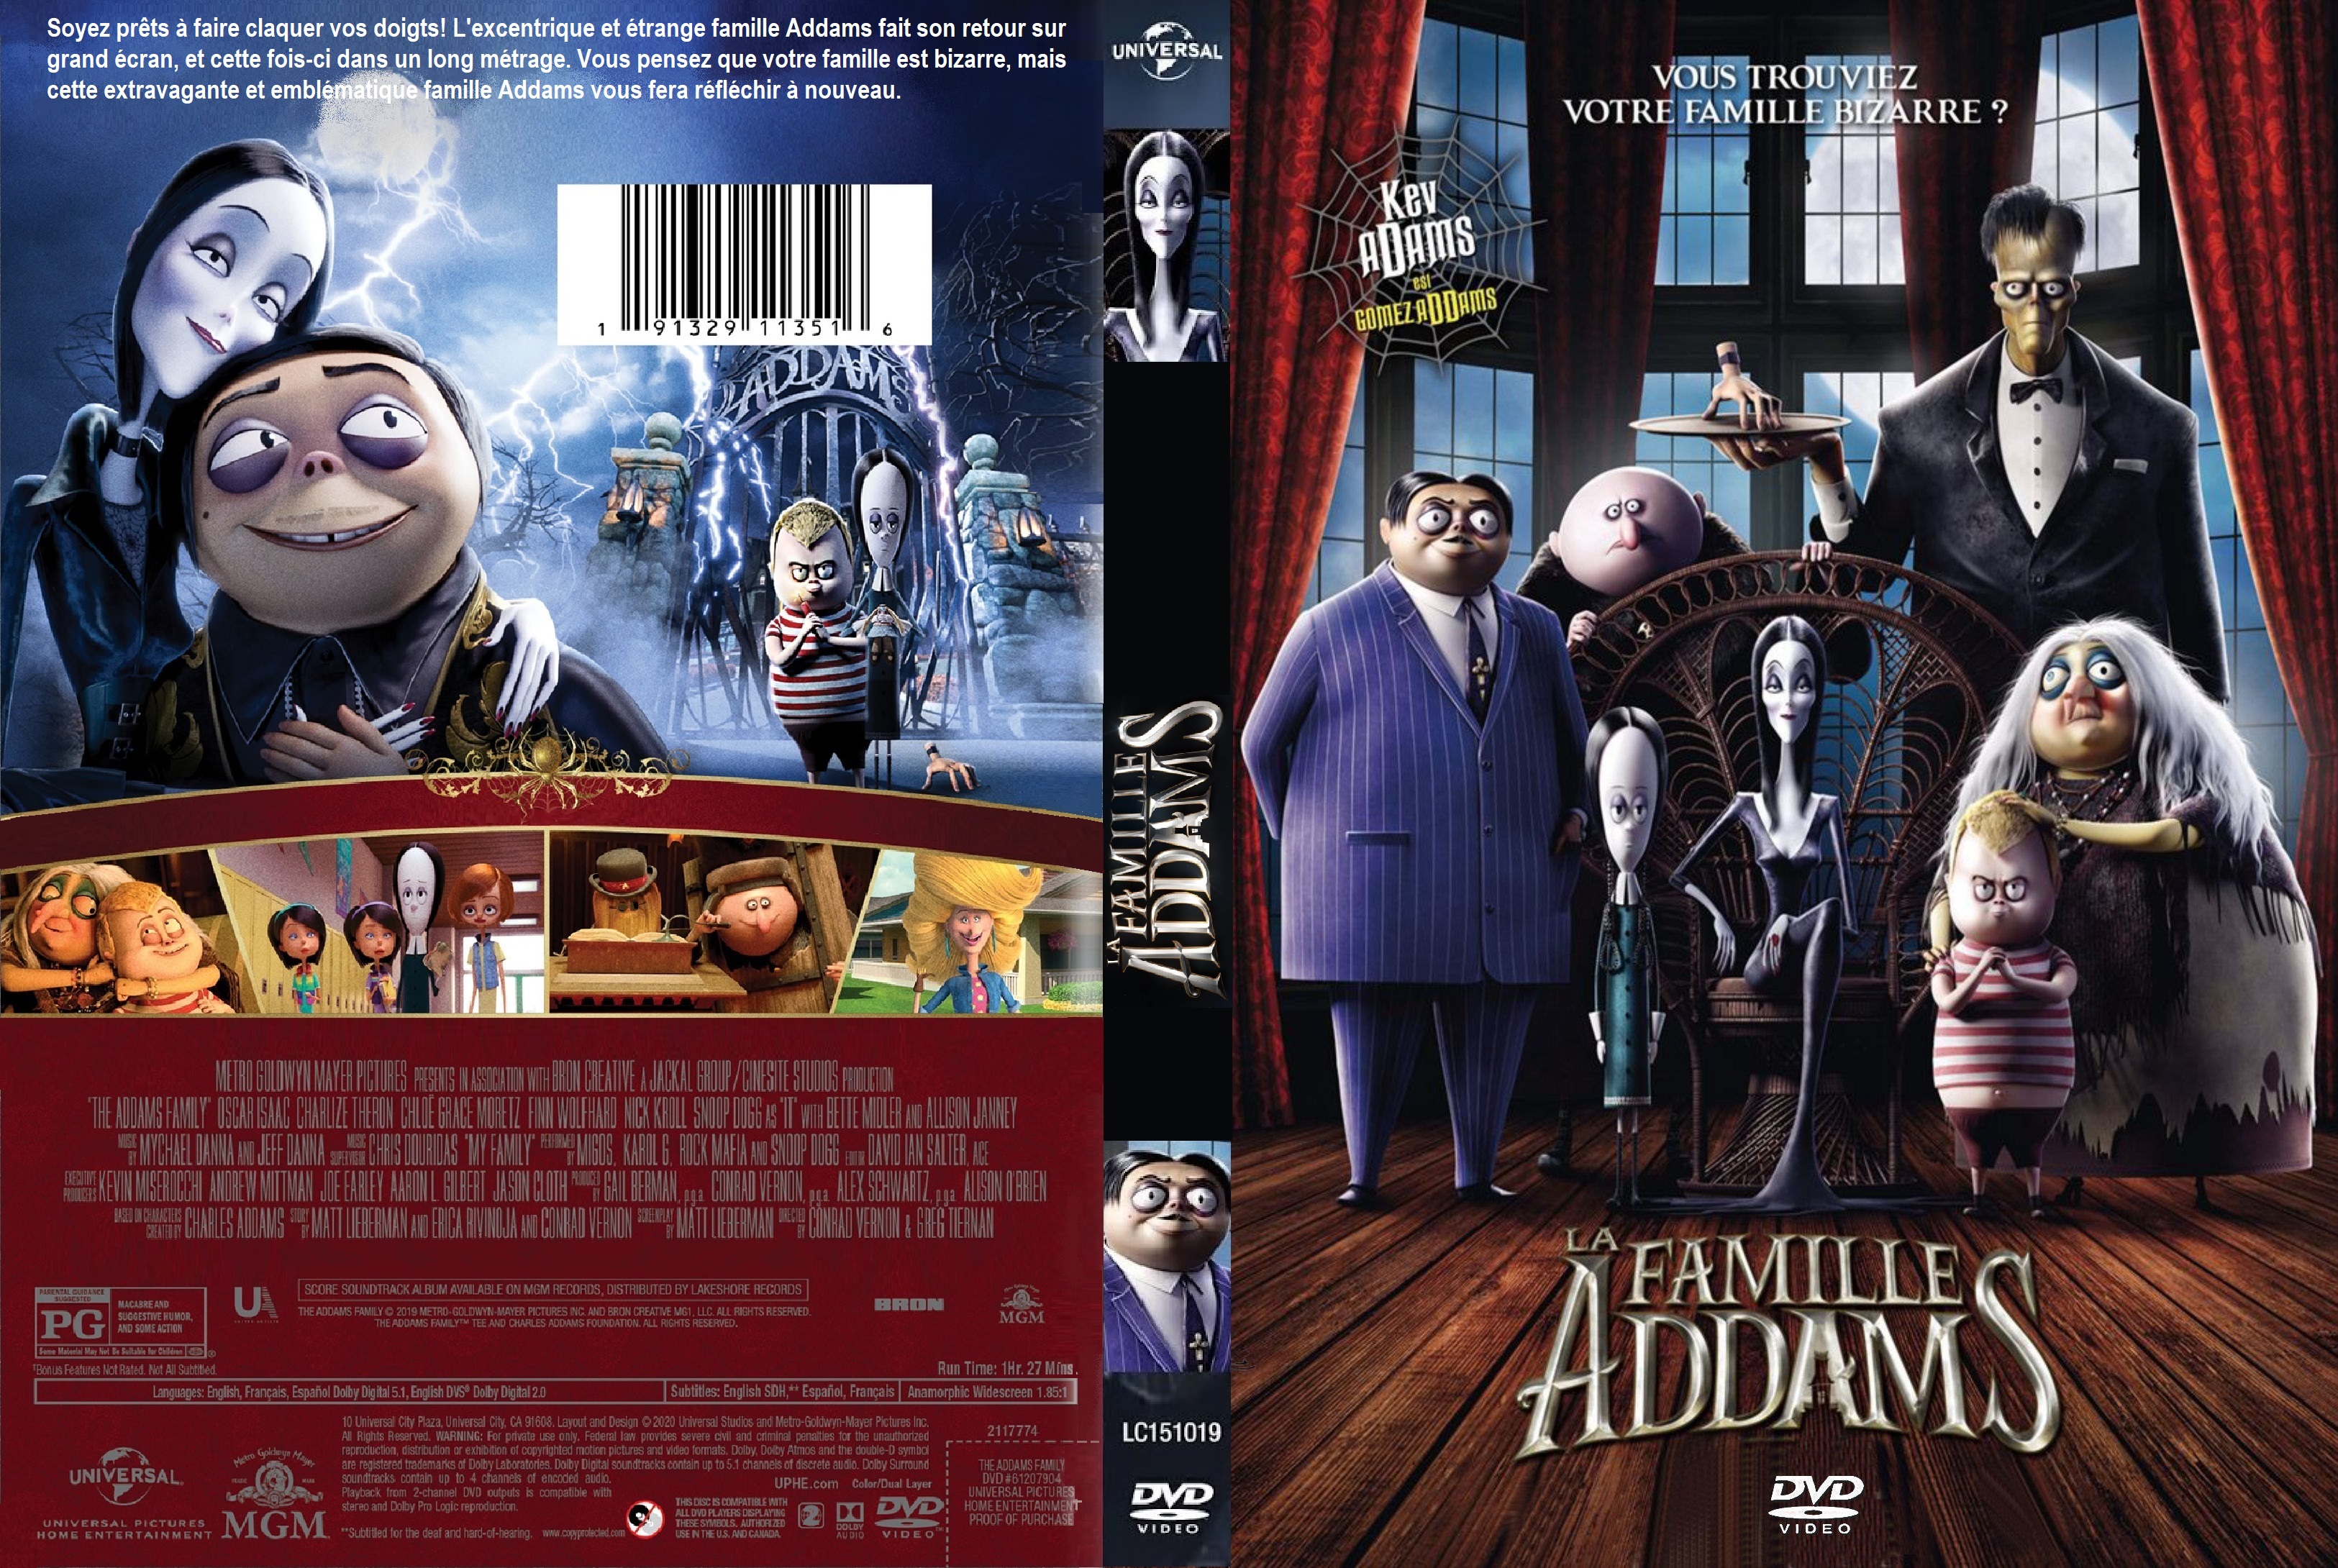 Jaquette DVD La famille Addams (2019) custom